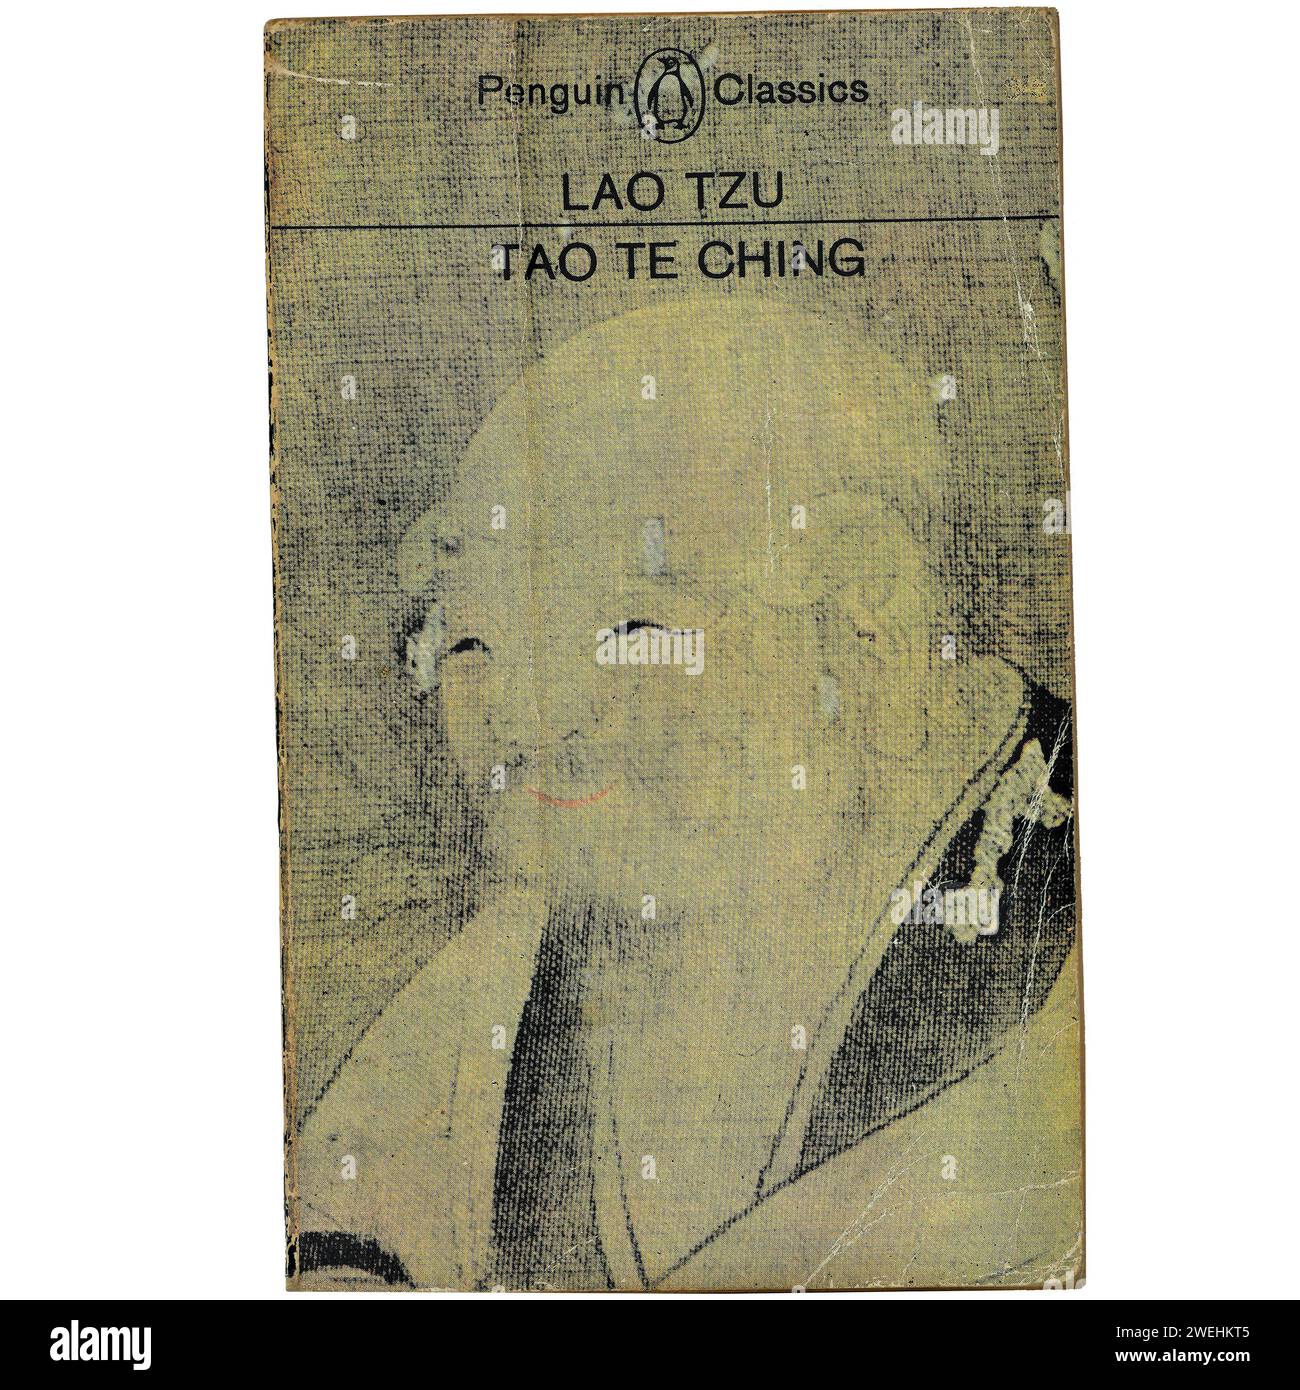 Lao Tzu - Toa Te Ching book cover. Studio set up on light / white background Stock Photo